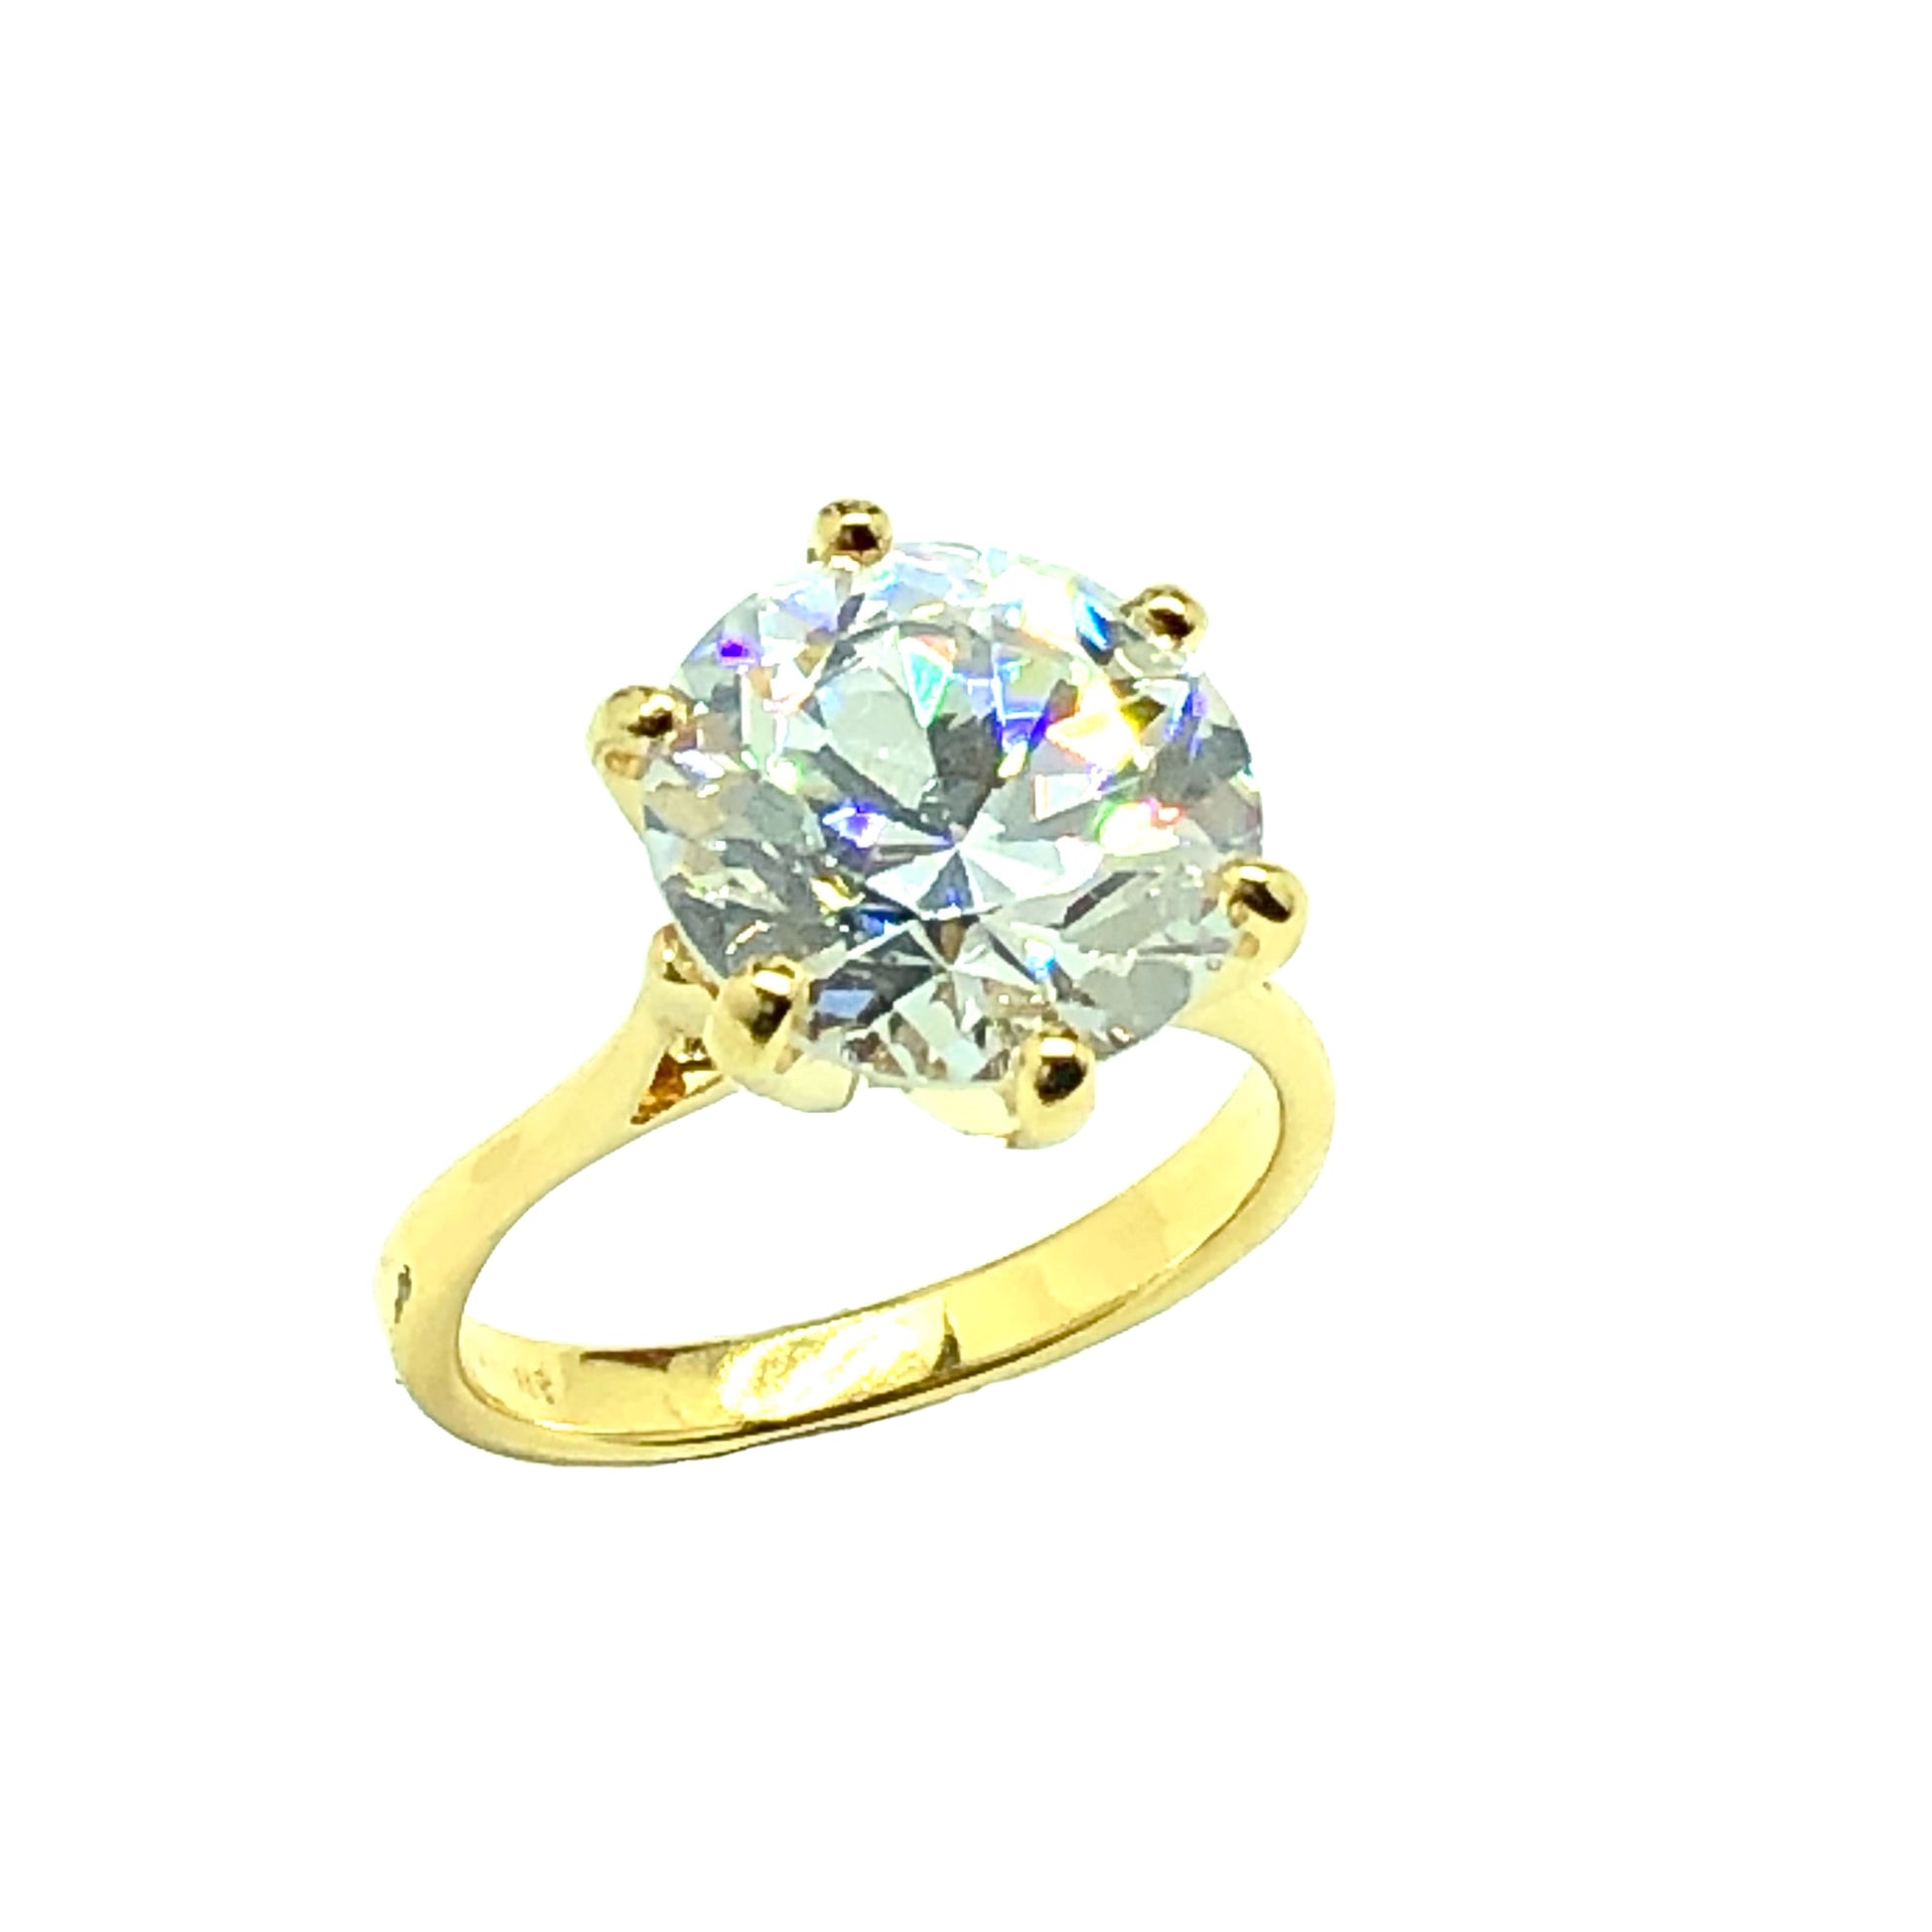 Jewelry used| SassY Gold Sterling Silver BIG 8ct Diamond Alternative Cz Ring  - Blingschlingers USA